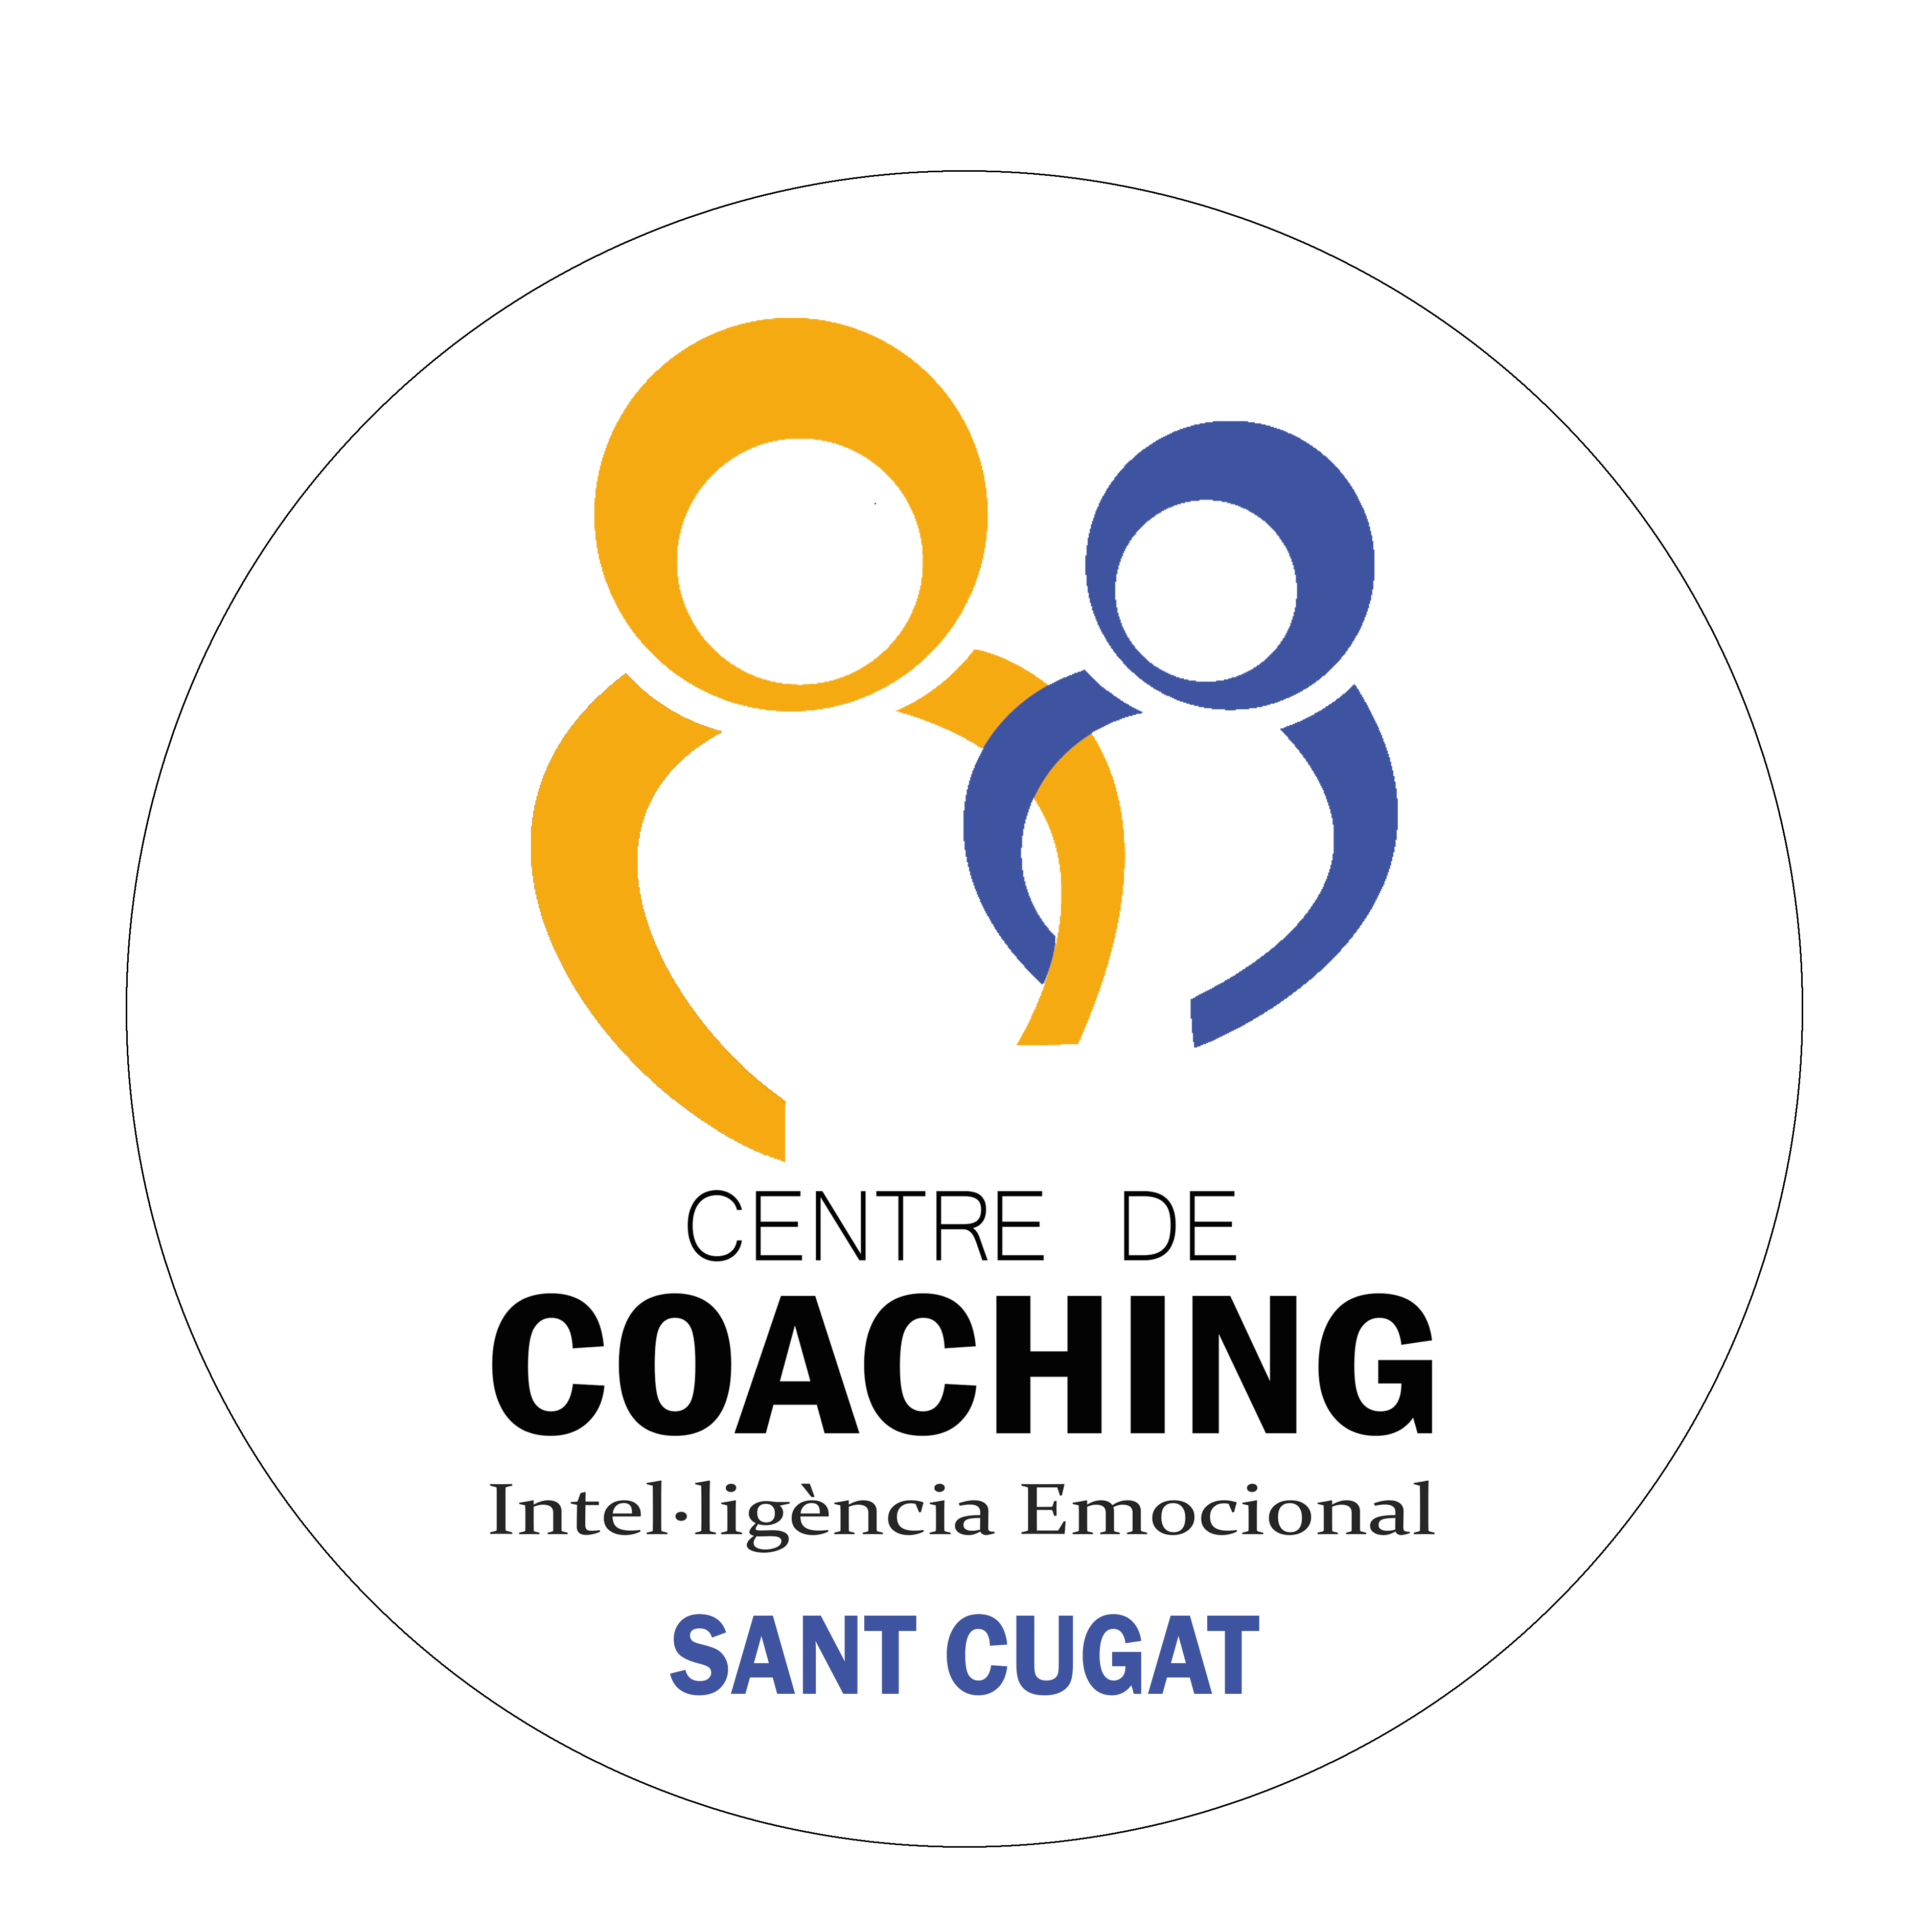 Centre de coaching i intel·ligència emocional de Sant Cugat